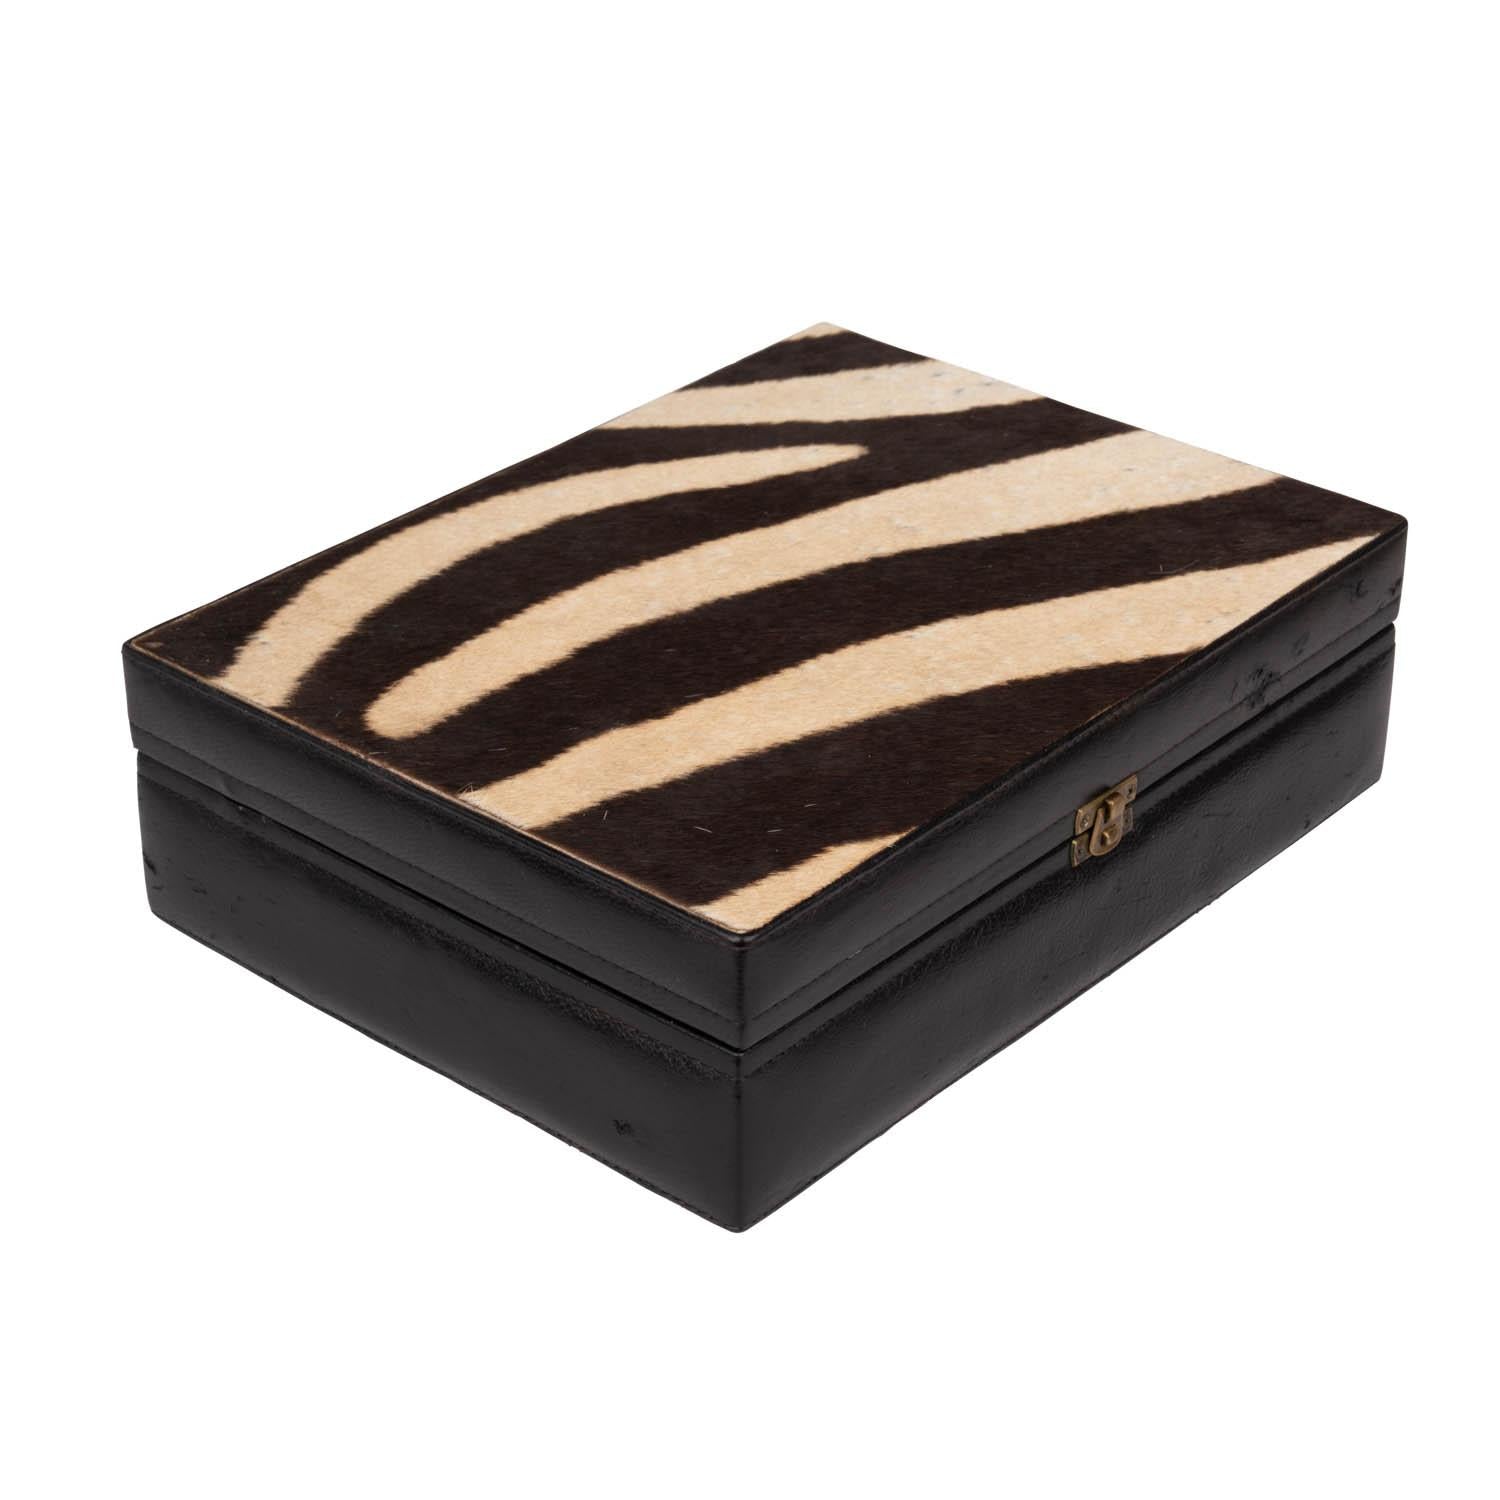 Zebra Hide & Leather Box - Large